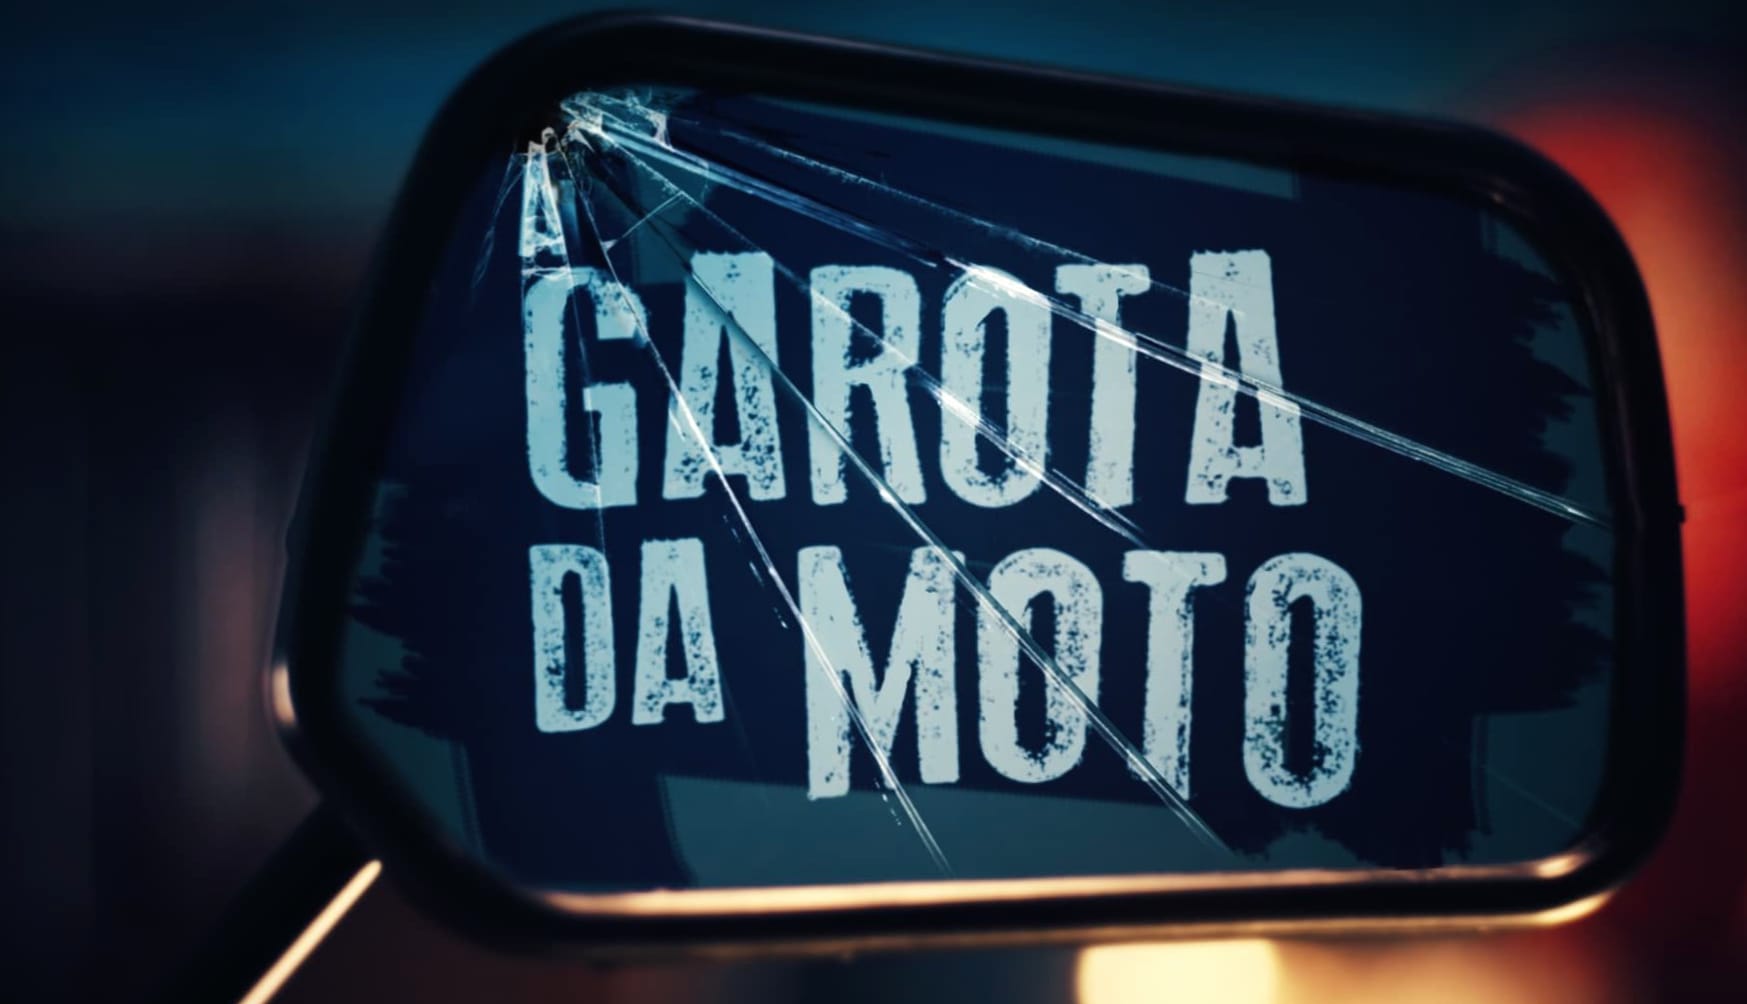 A Garota da Moto at 1334 x 750 iPhone 7 size wallpapers HD quality